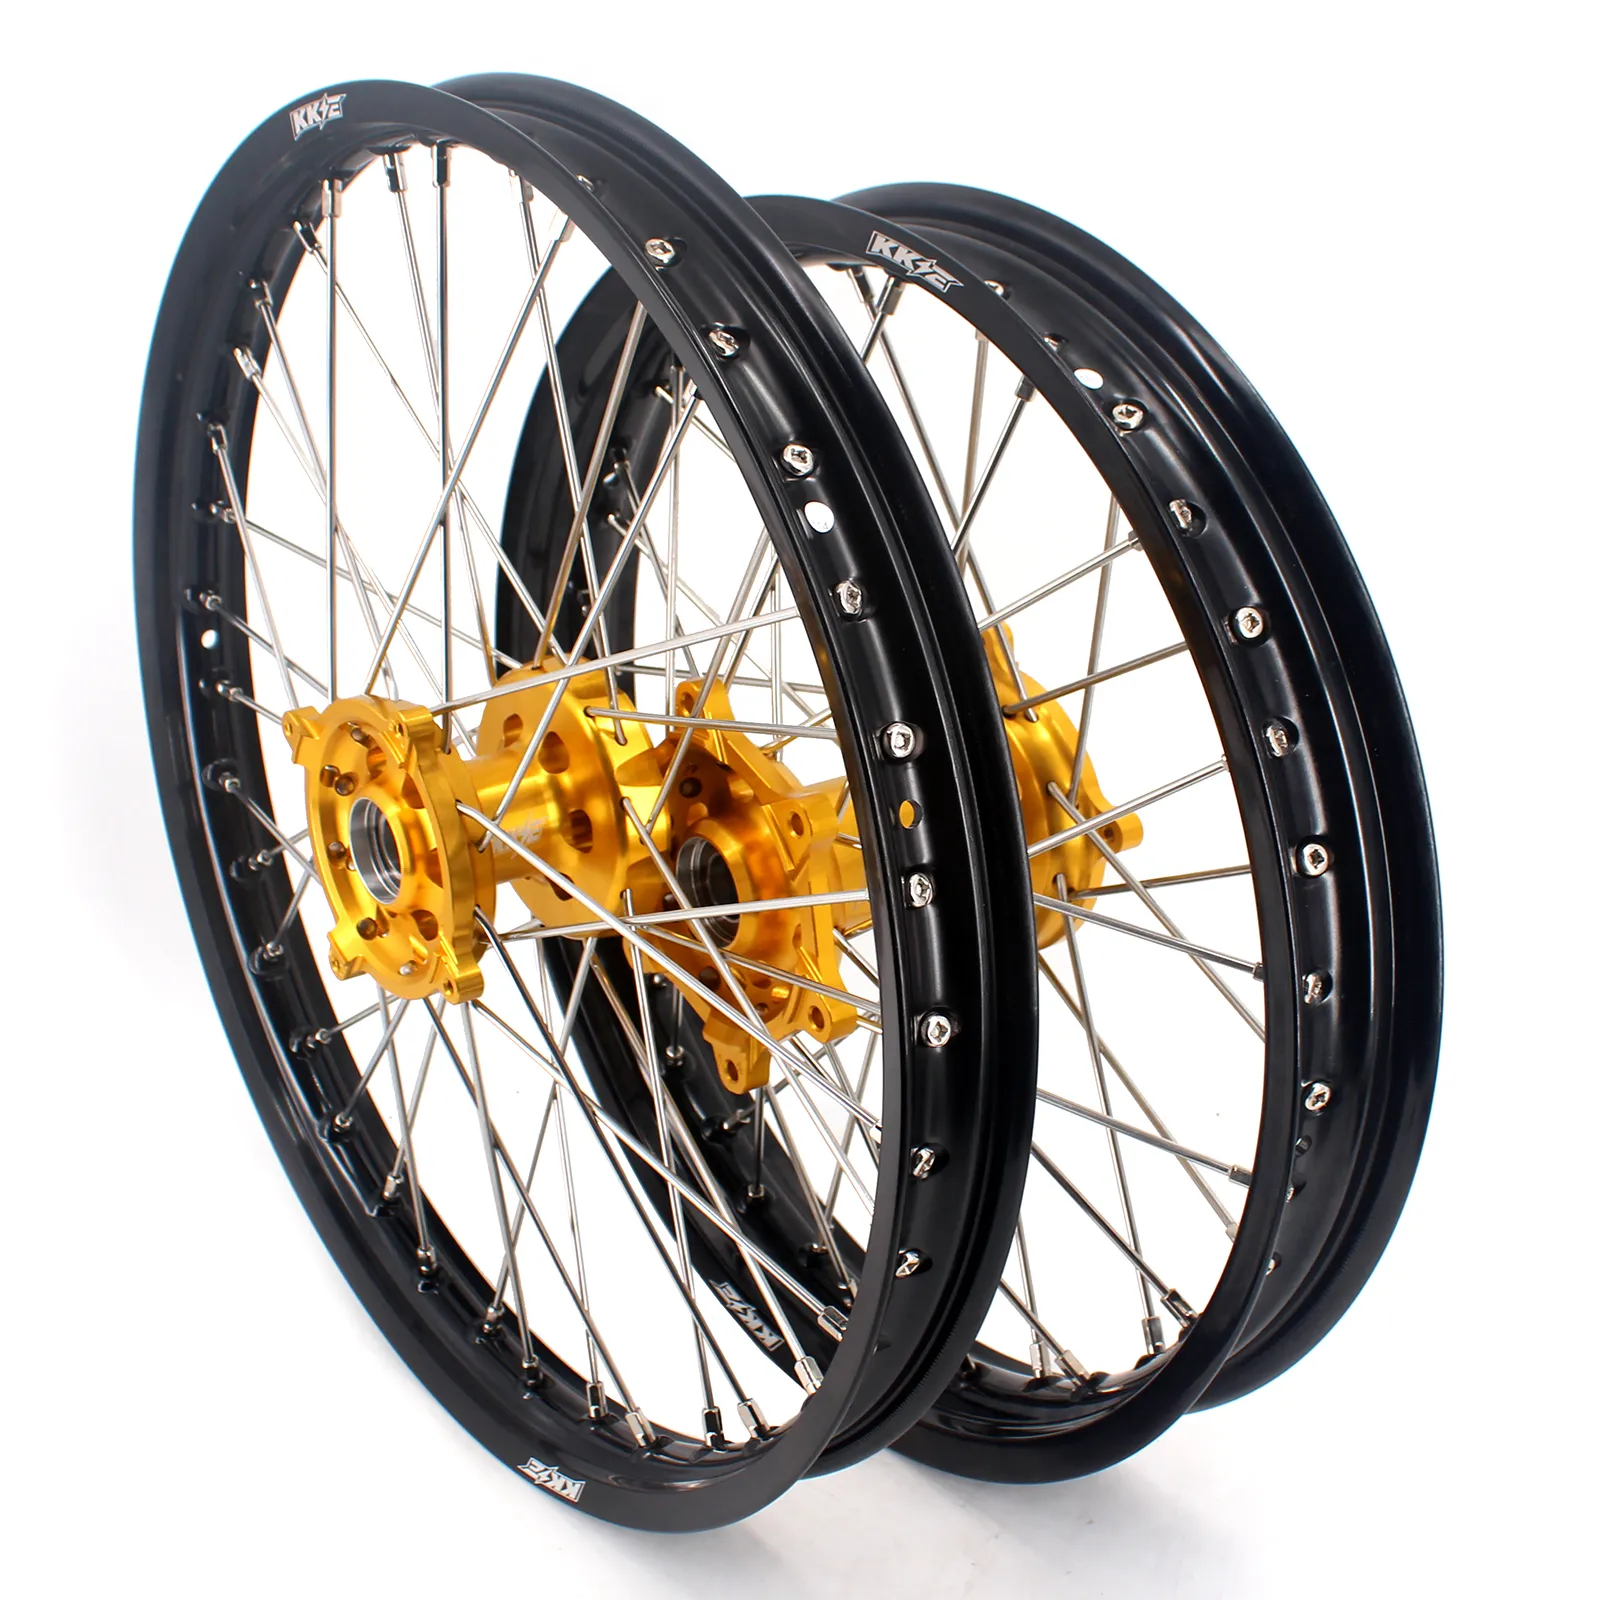 KKE Motorcycle Motocross MX 19 inch Alloy Wheels Rims Set Fit for SUZUKI RMZ250 RMZ450 Gold Hub Black Rim 304 Stainless Steel